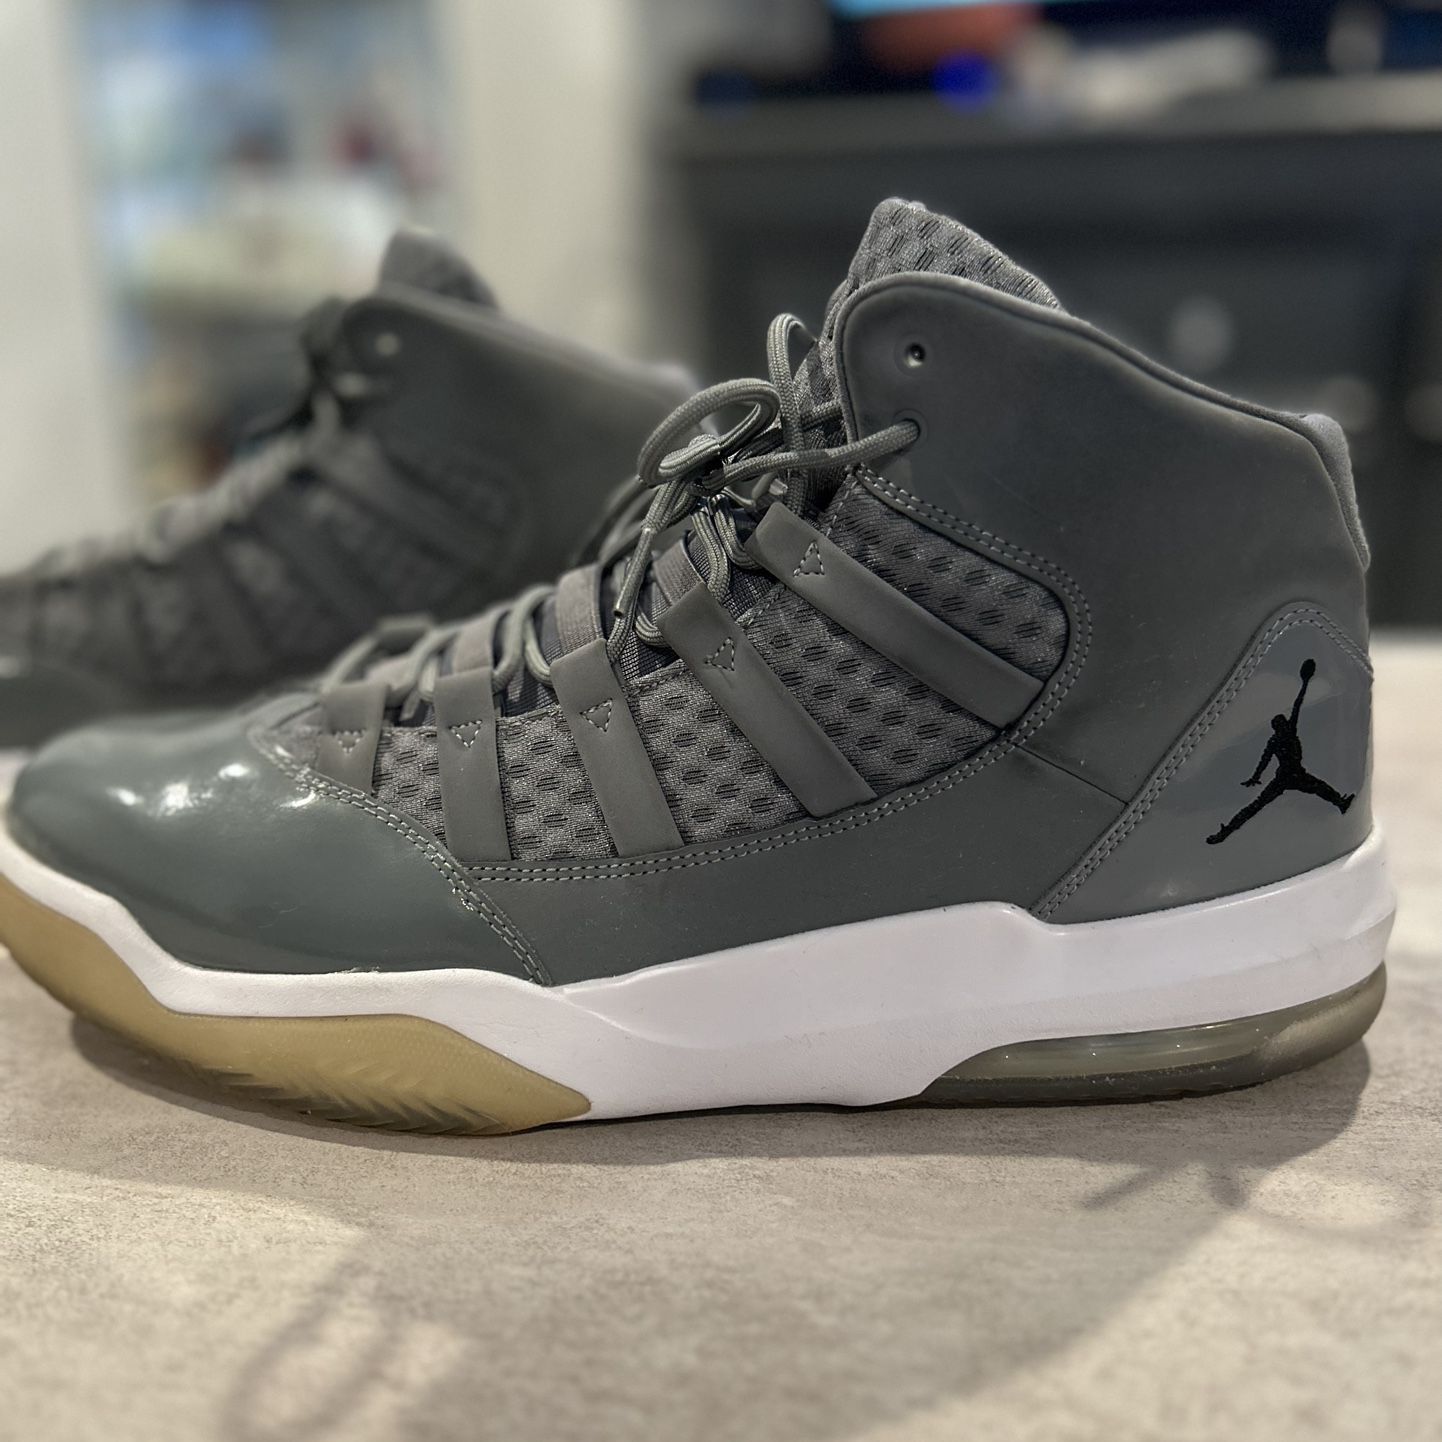 Nike Jordan Max Aura “Cool Grey” Size 13